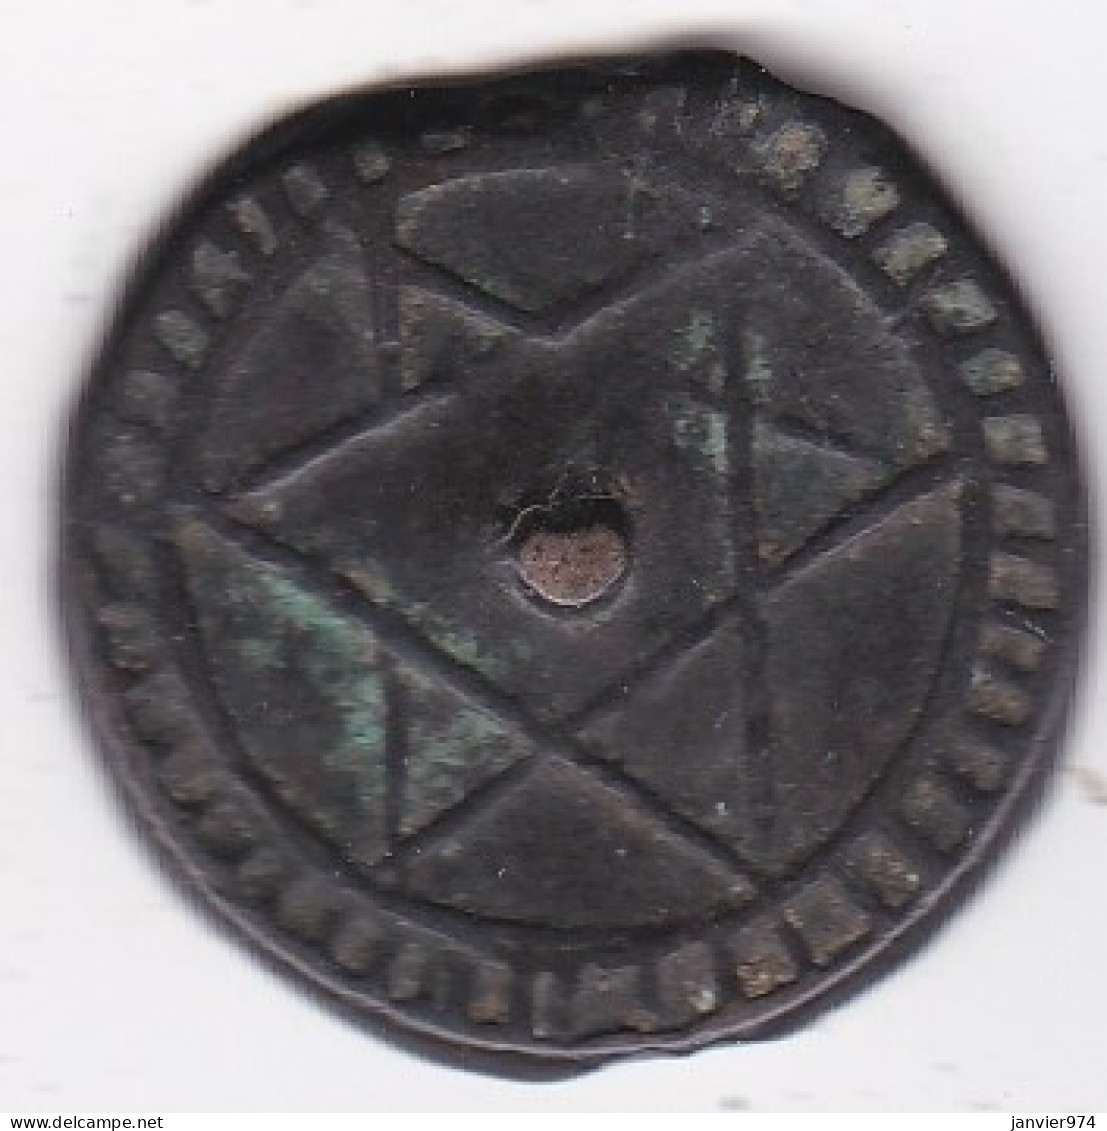 MAROC. 2 Falus AH 1283 - 1867 Fès , Date à L’envers,  En Bronze, Rare - Maroc